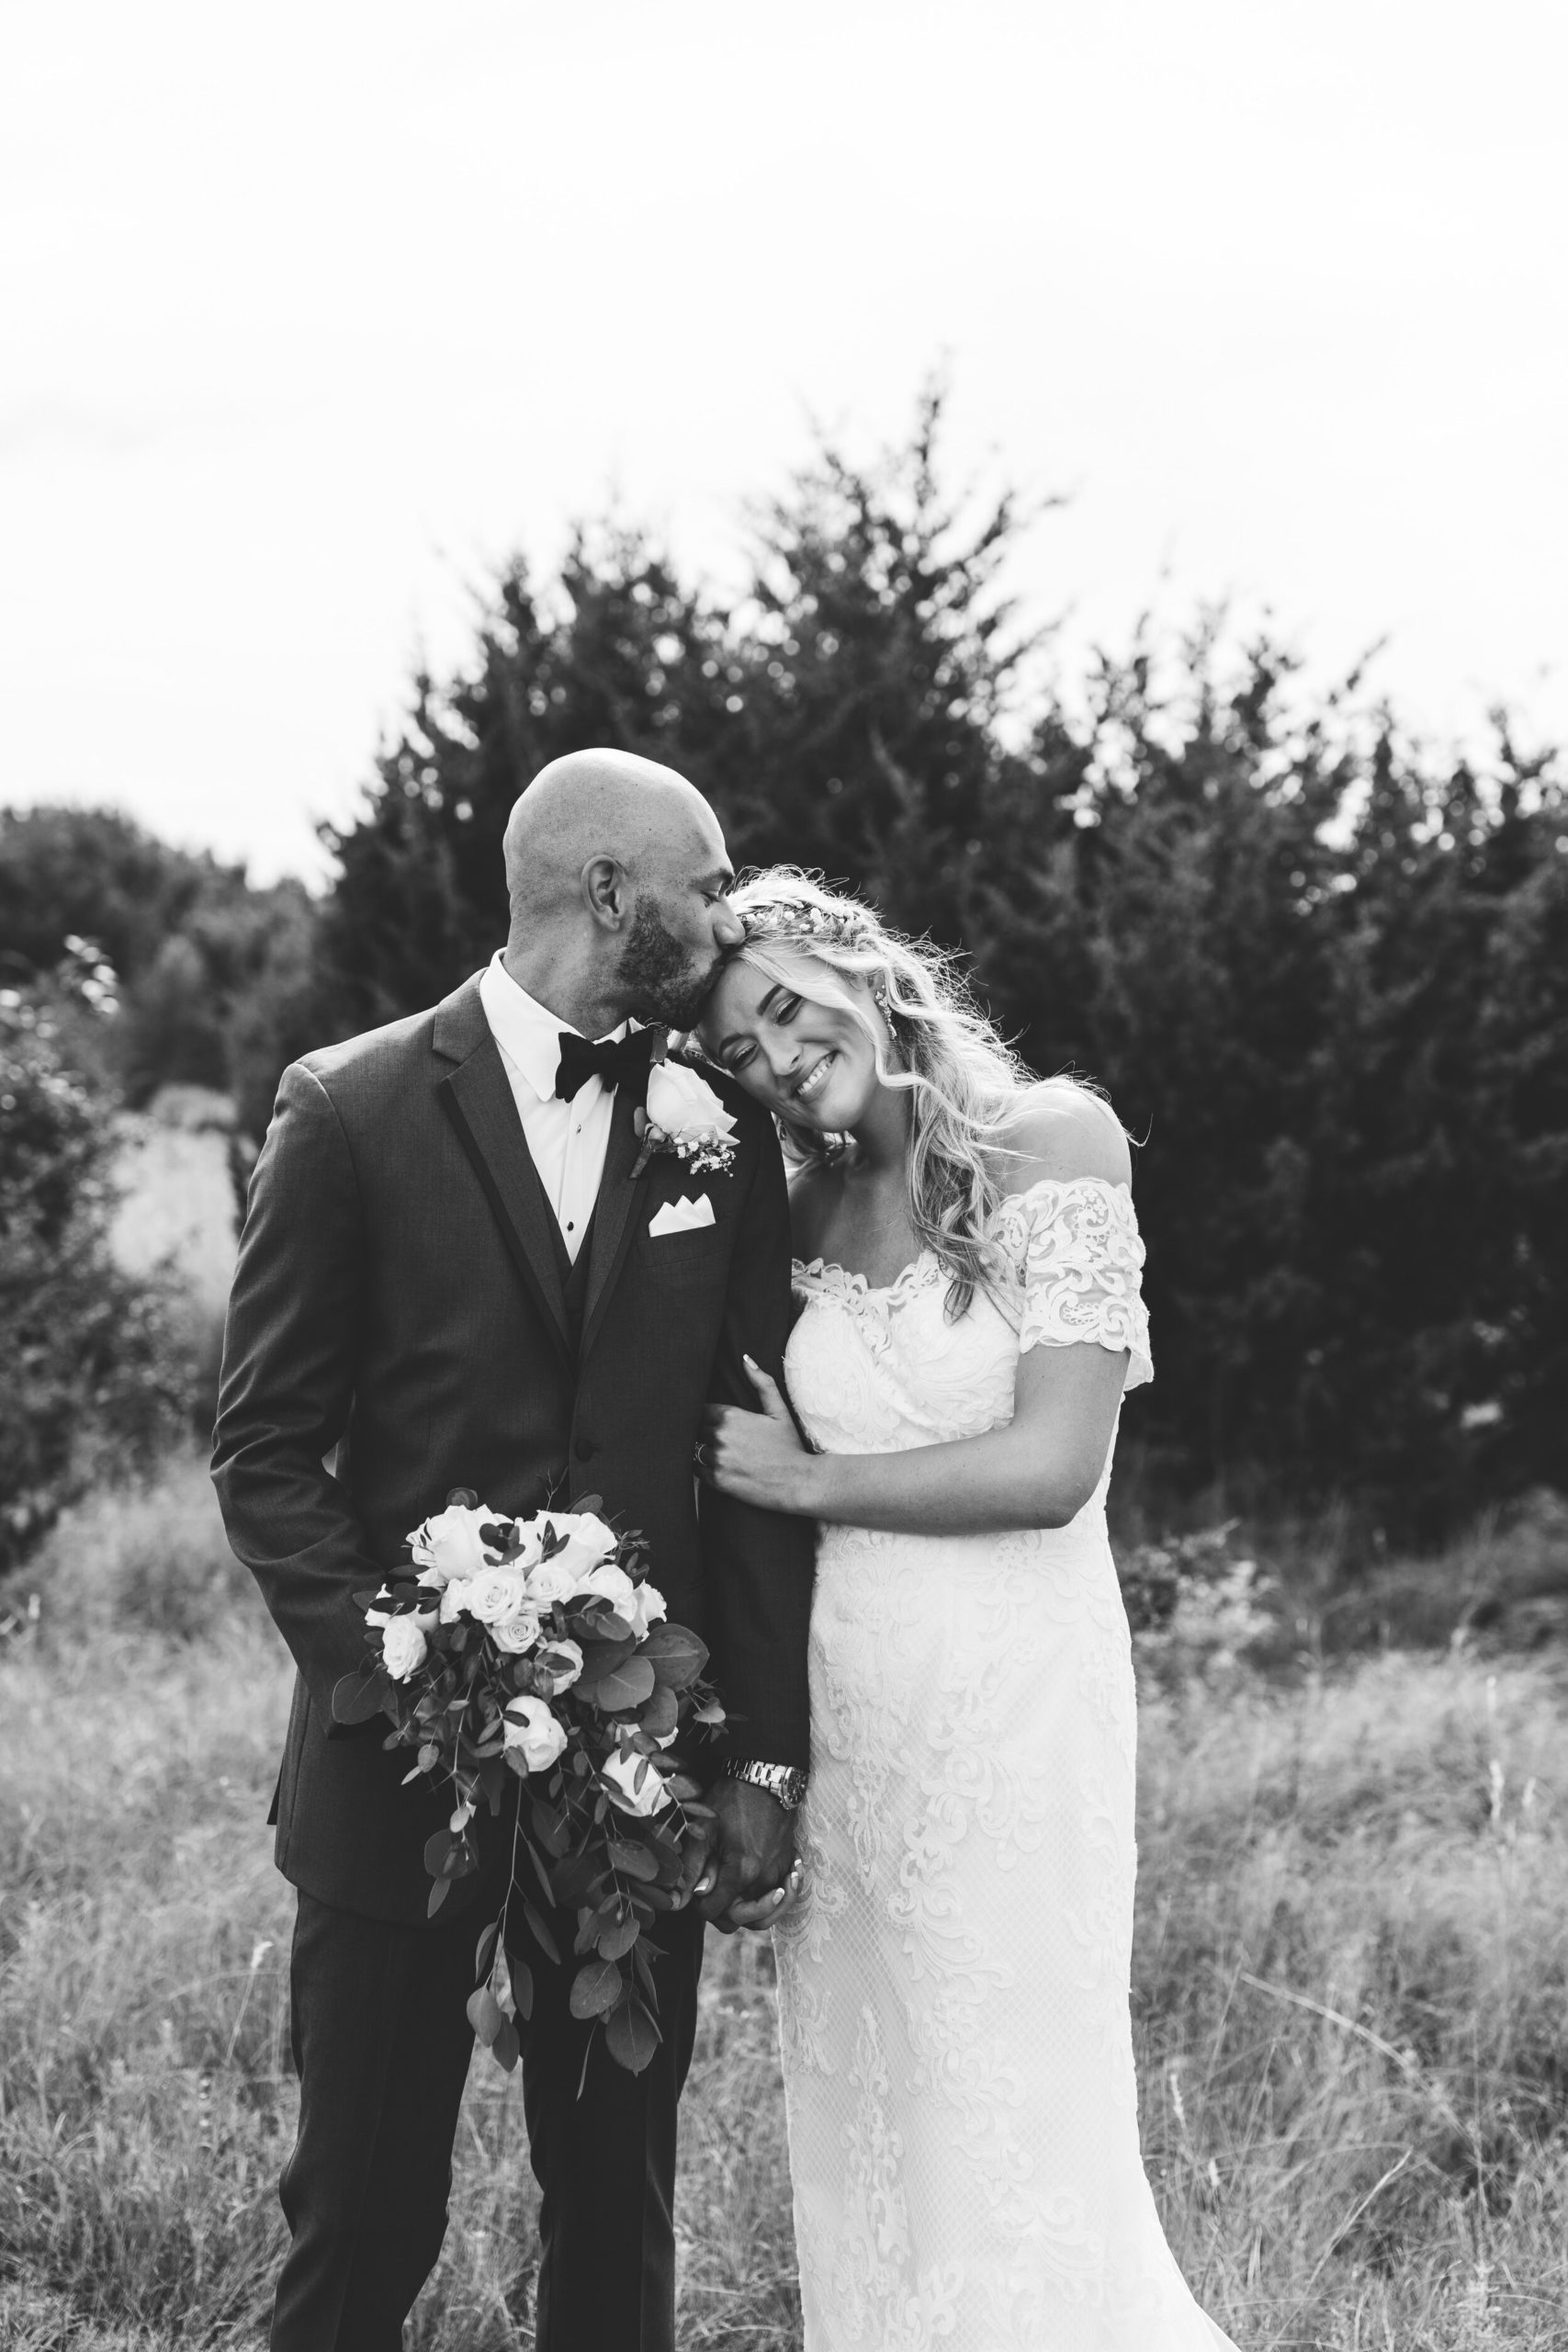 Hayley + Lorenzo - Summer White Chapel Wedding at Stone Hill Barn in Augusta, Kansas102.jpg